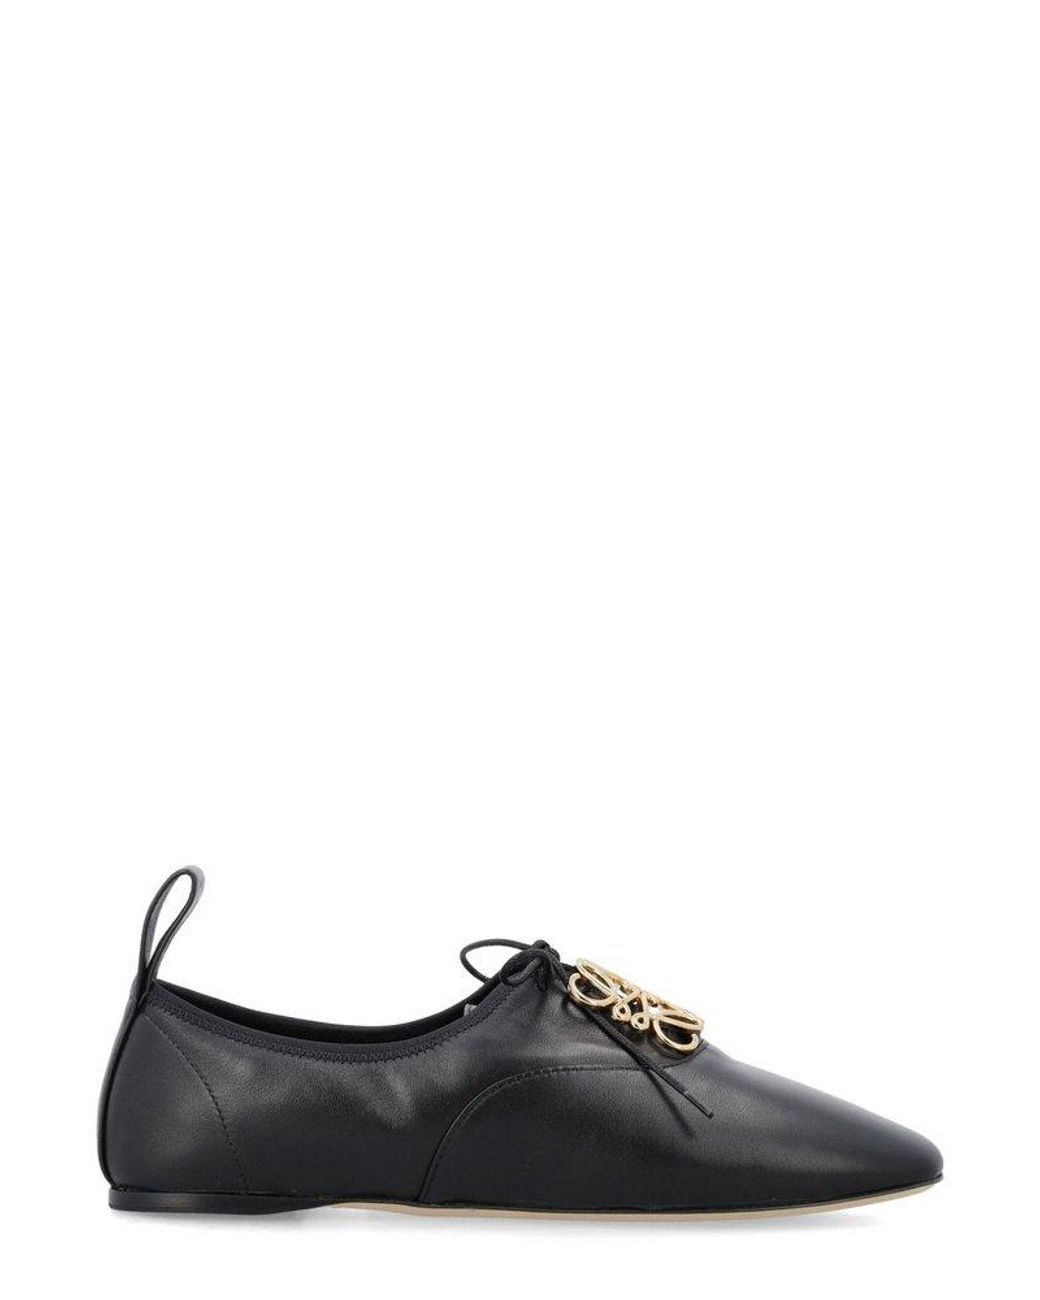 Loewe Anagram Plaque Derby Shoes in Black | Lyst